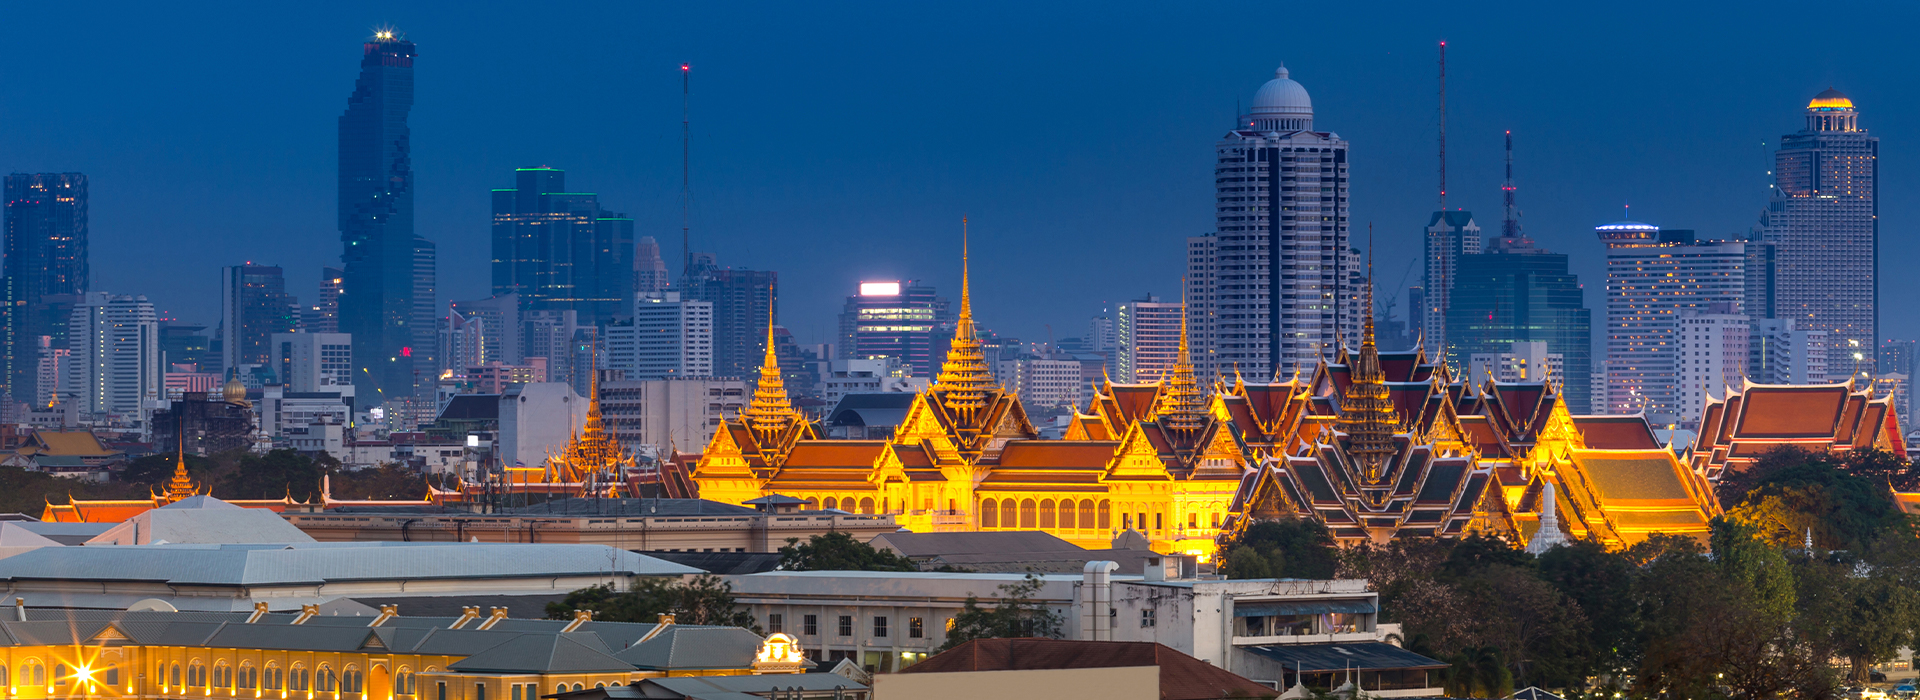 gran-palacio-real-bangkok-asia-tailandia